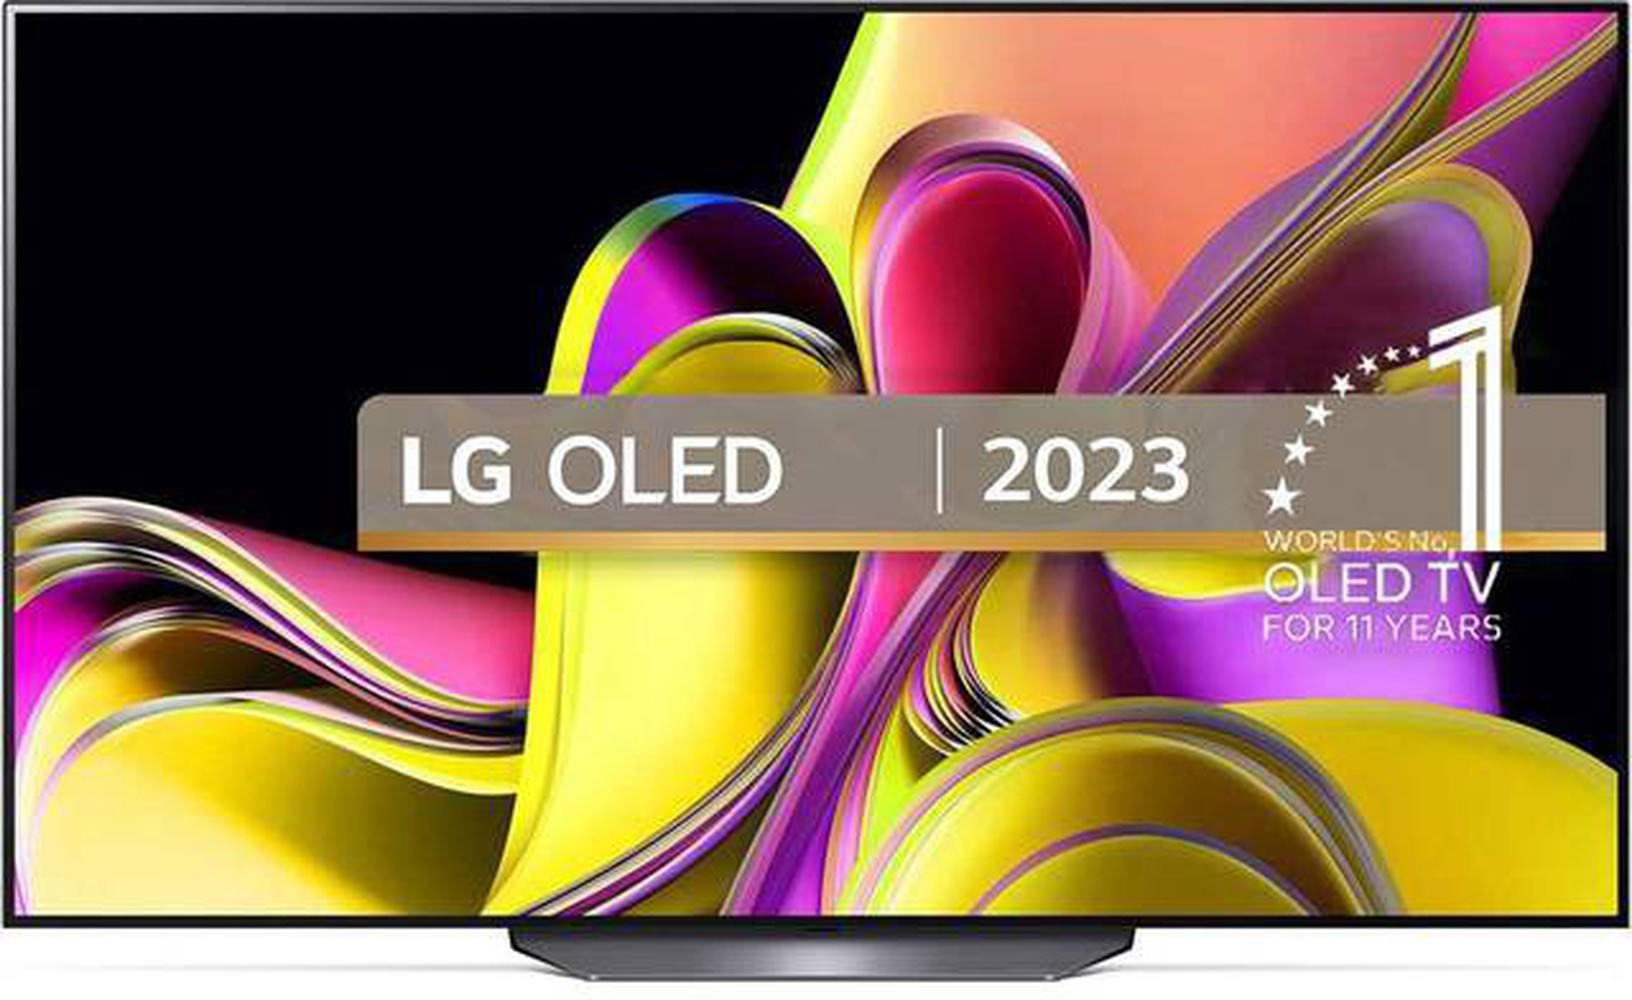 LG 55 inch OLED TV